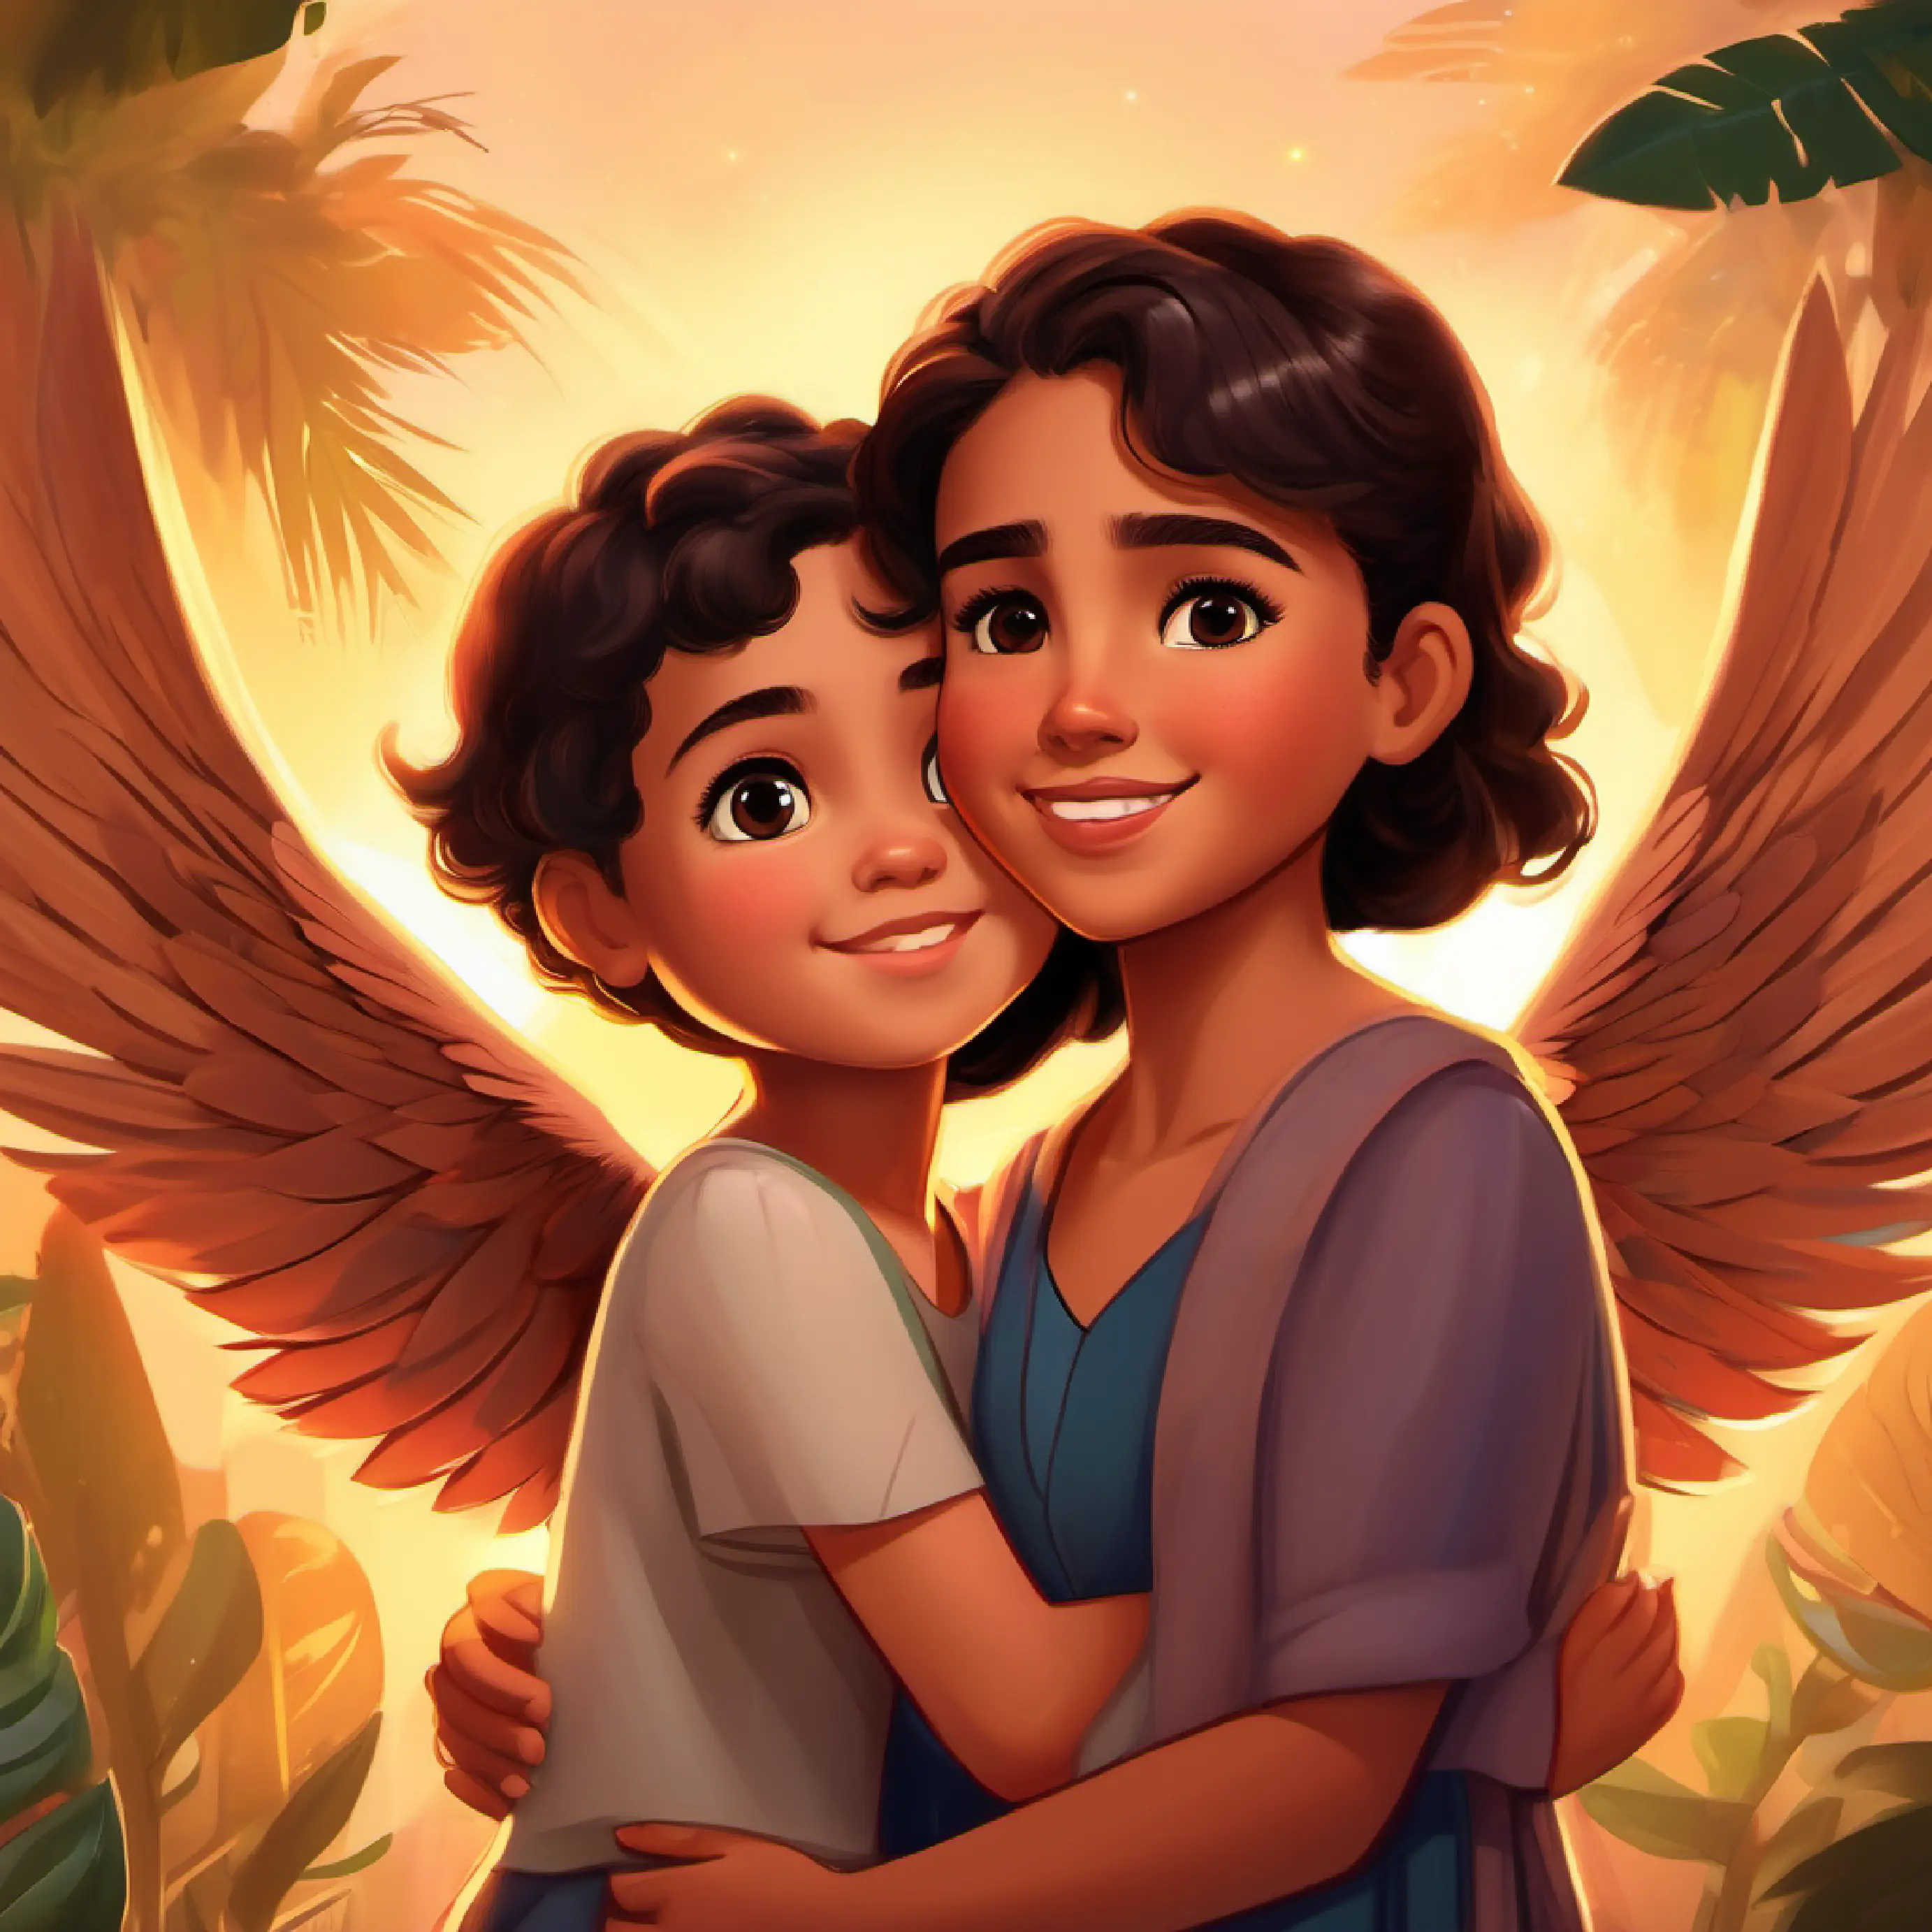 Nayeli hugs Rosa, whose wings start to glow.